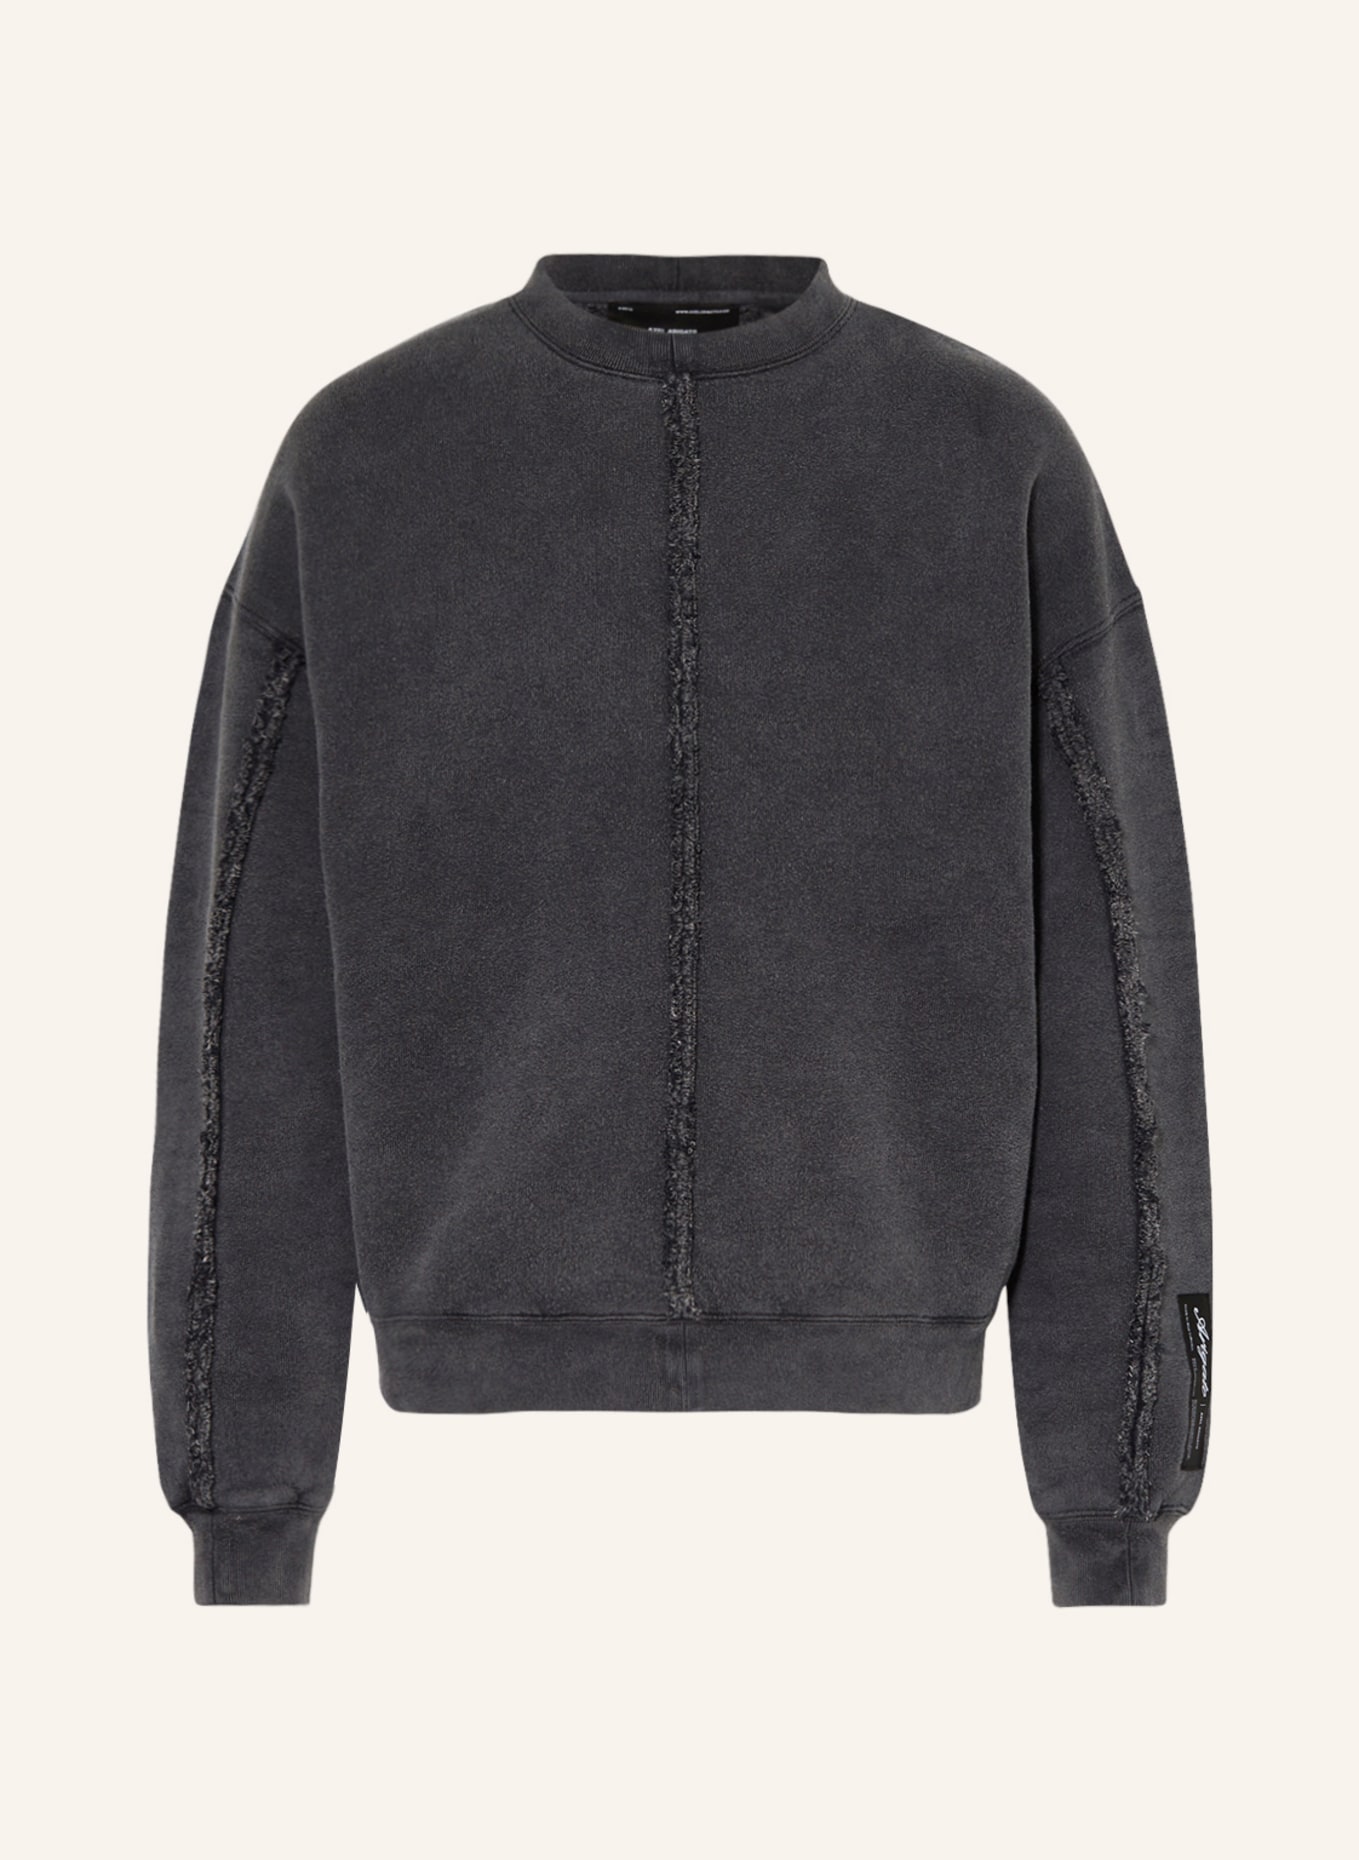 AXEL ARIGATO Oversized-Sweatshirt, Farbe: SCHWARZ (Bild 1)